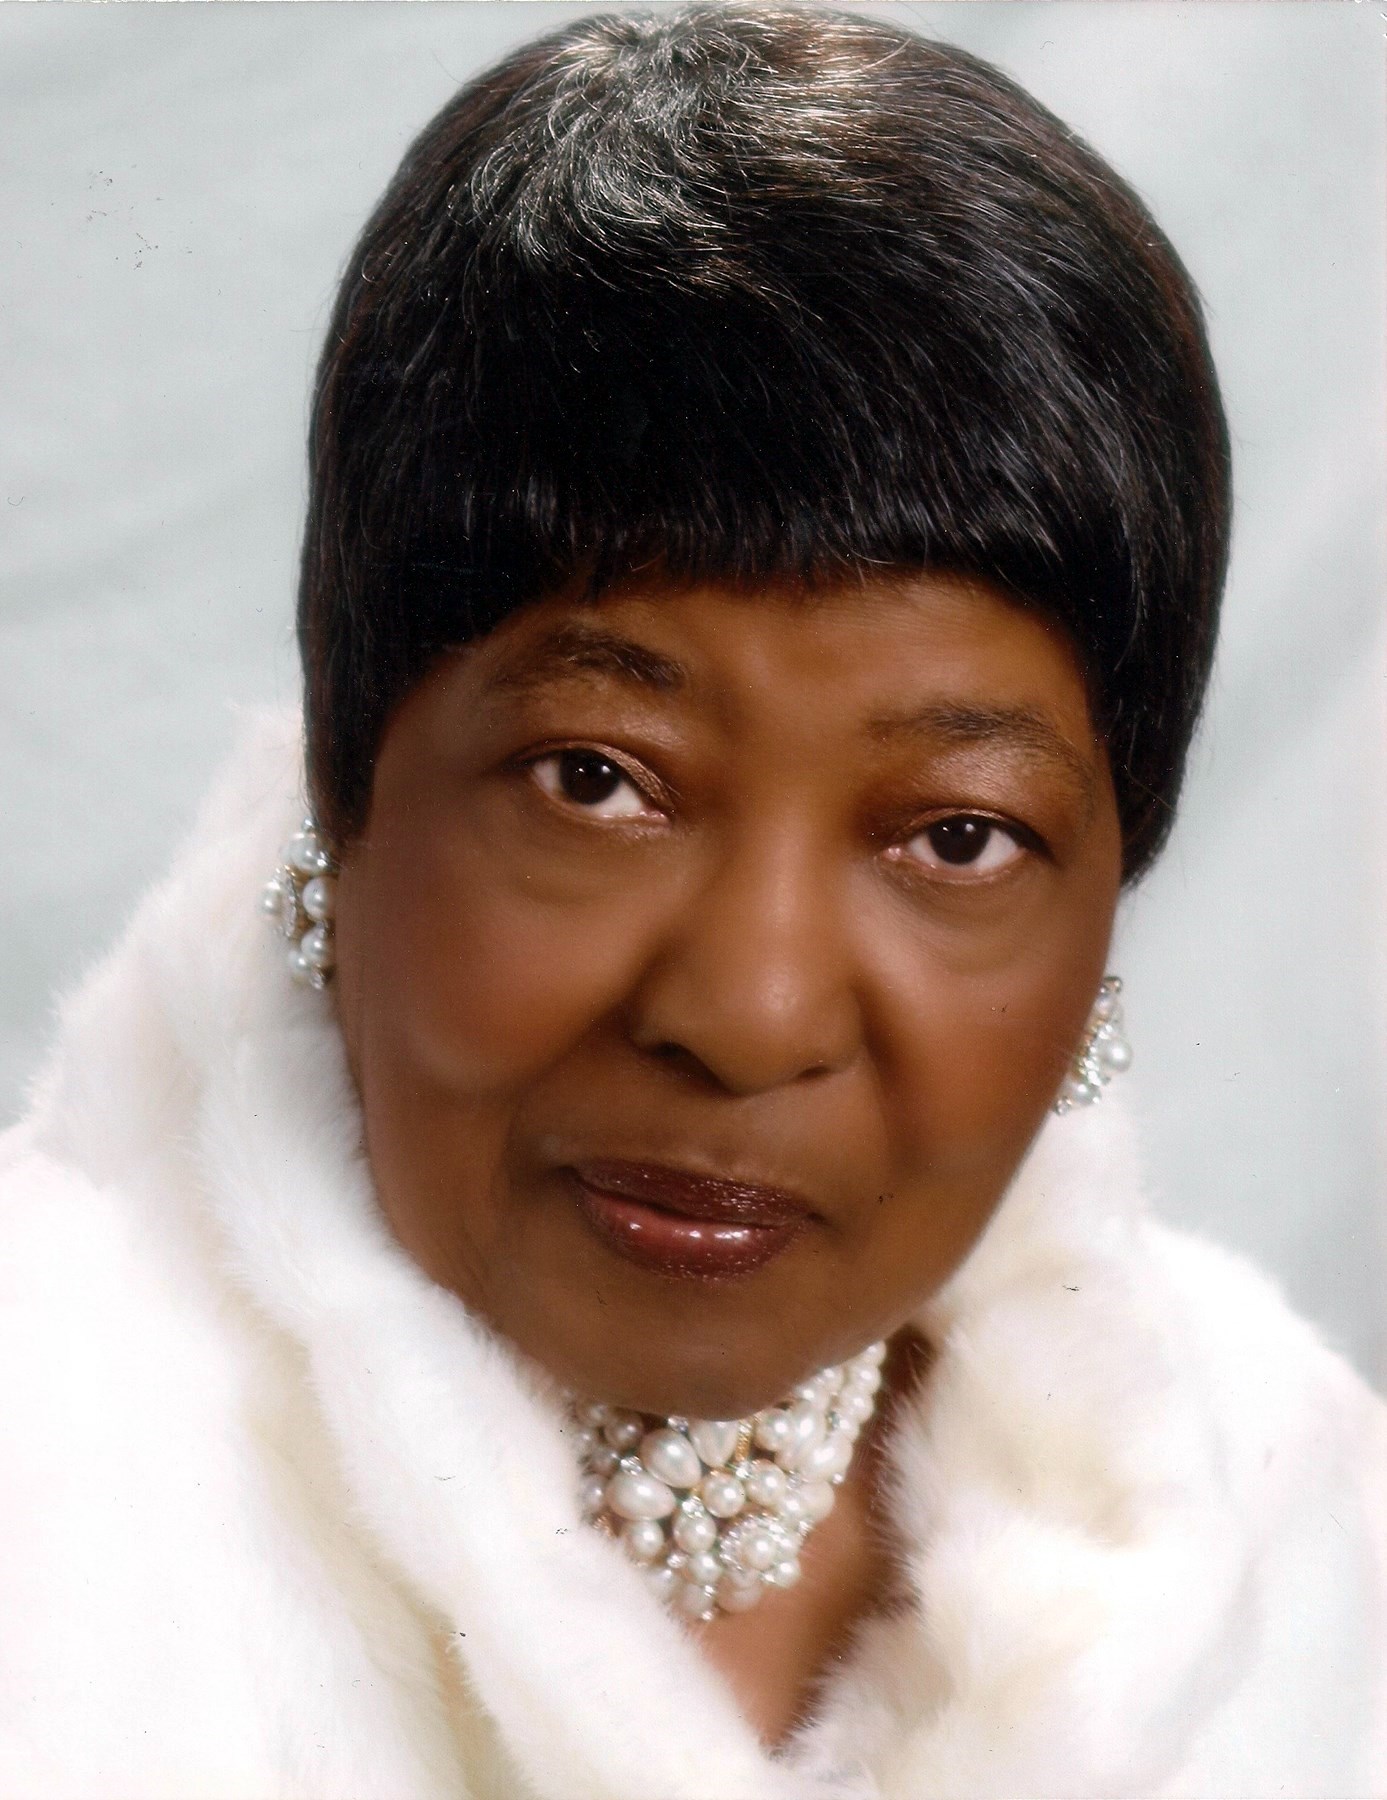 Lottie M. Ross Obituary - Colton, CA